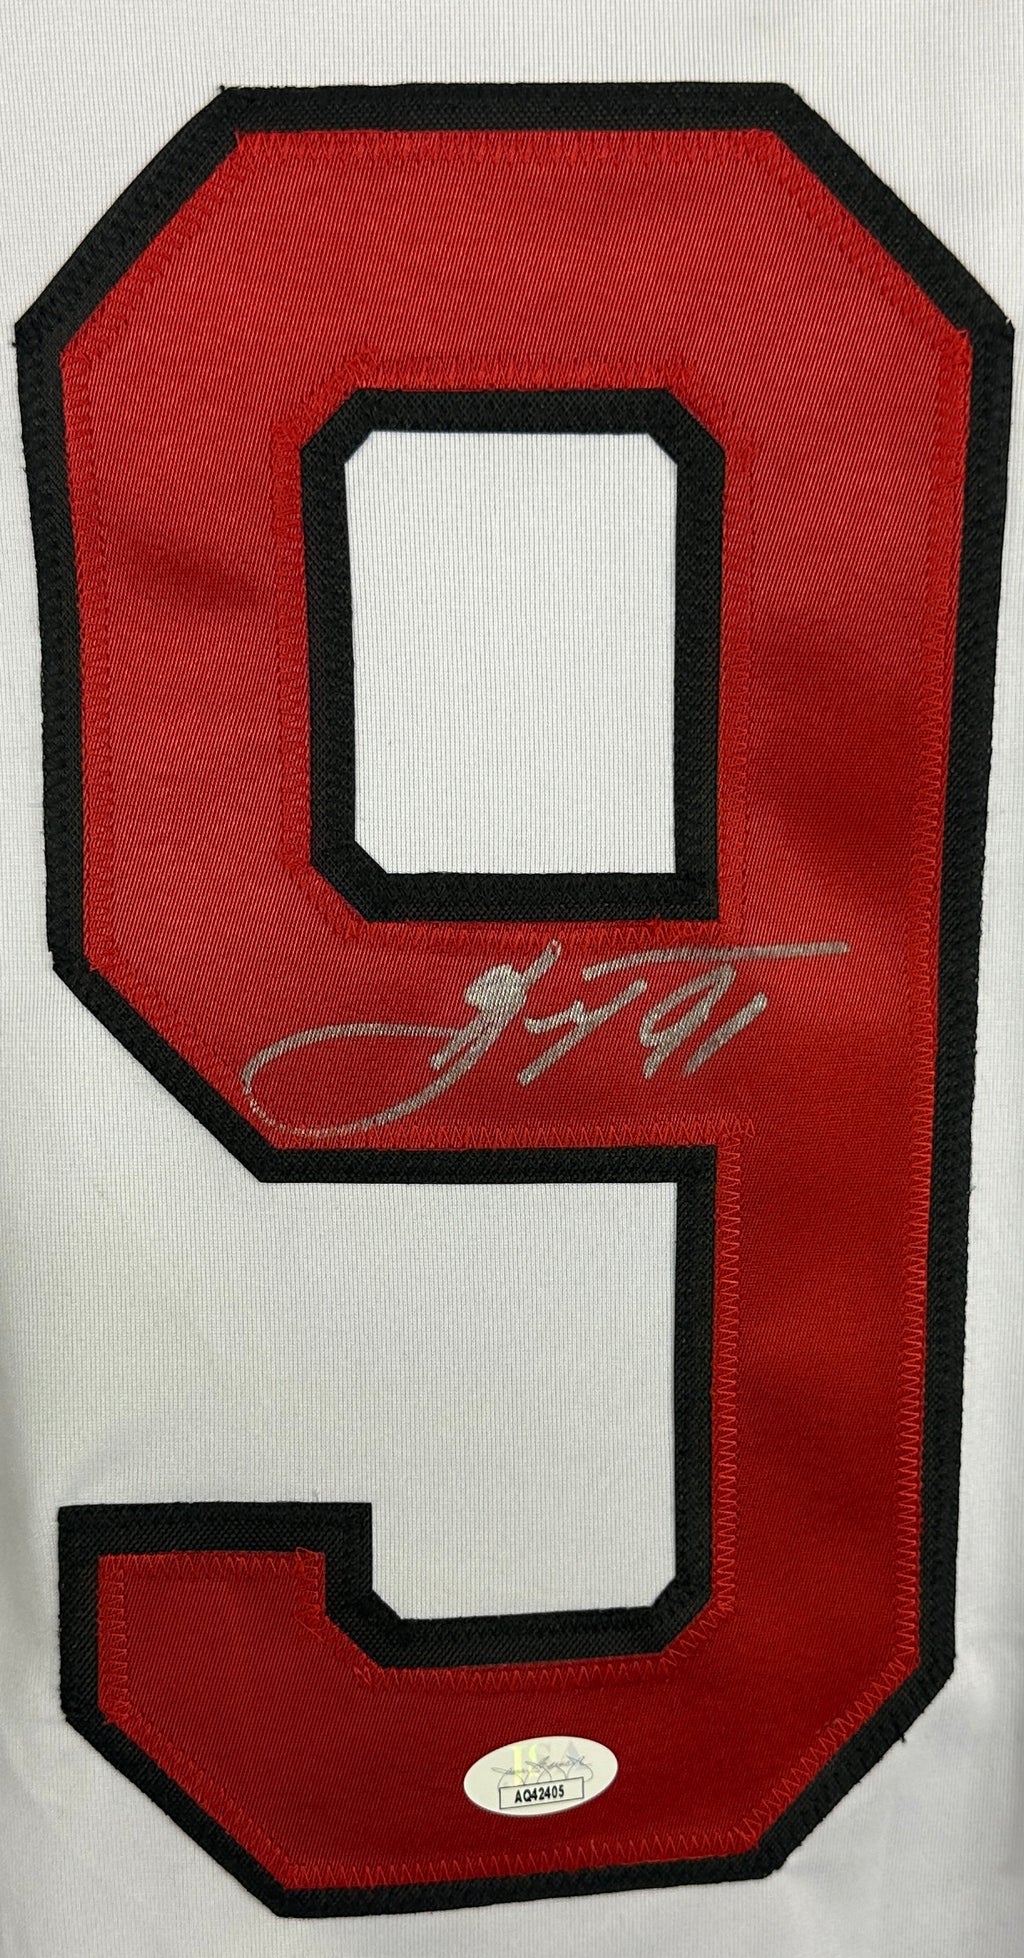 Vladimir Tarasenko autographed signed jersey autographed Ottawa Senators JSA COA